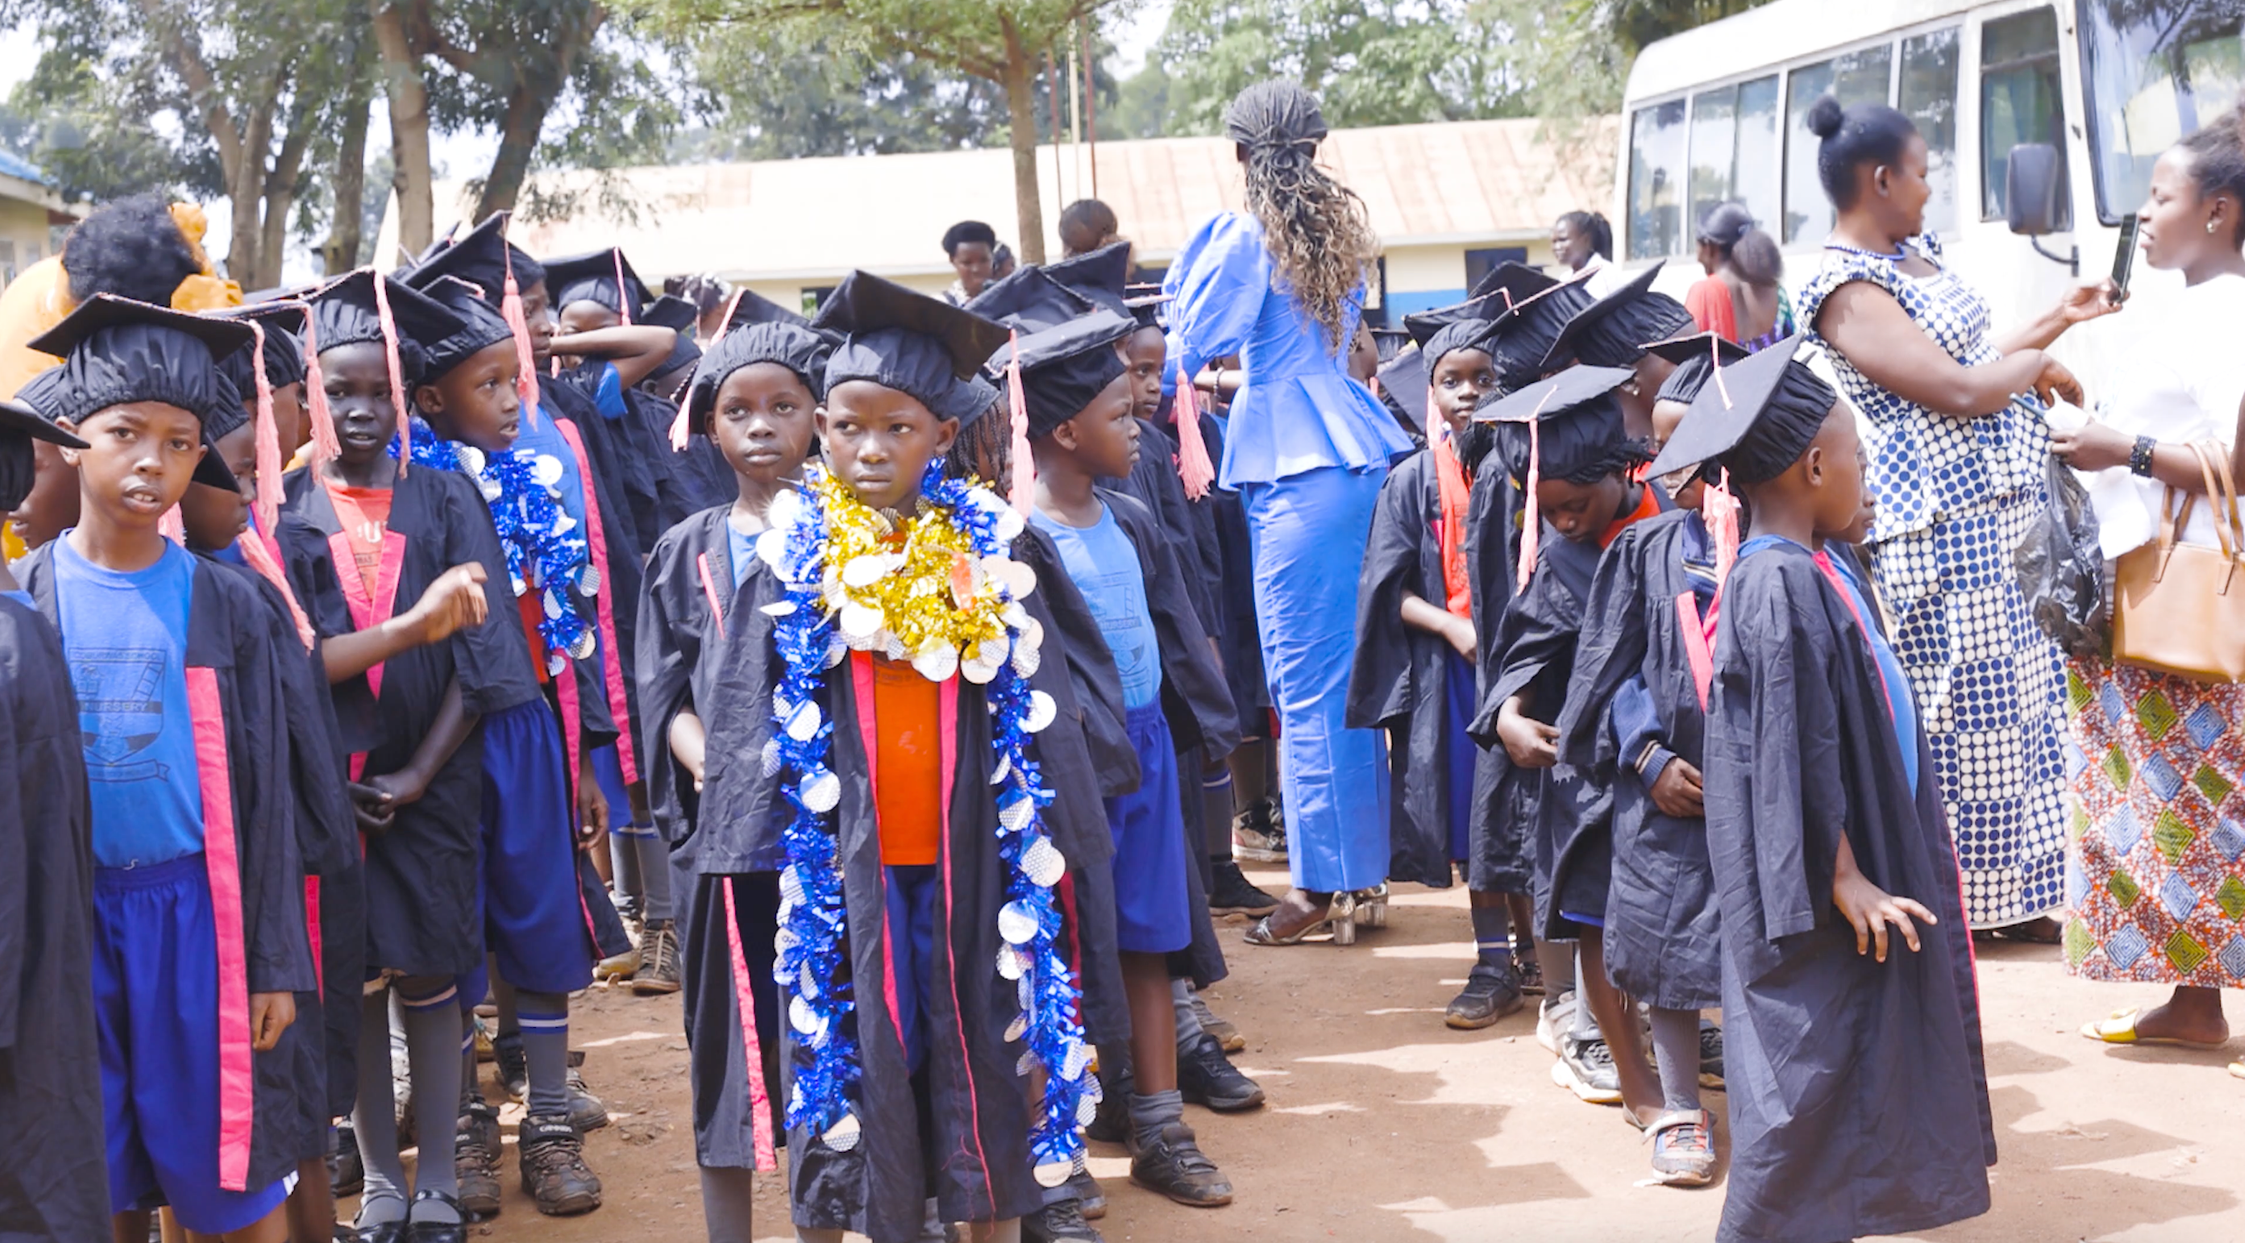 Primary school students from Uganda in graduation garb